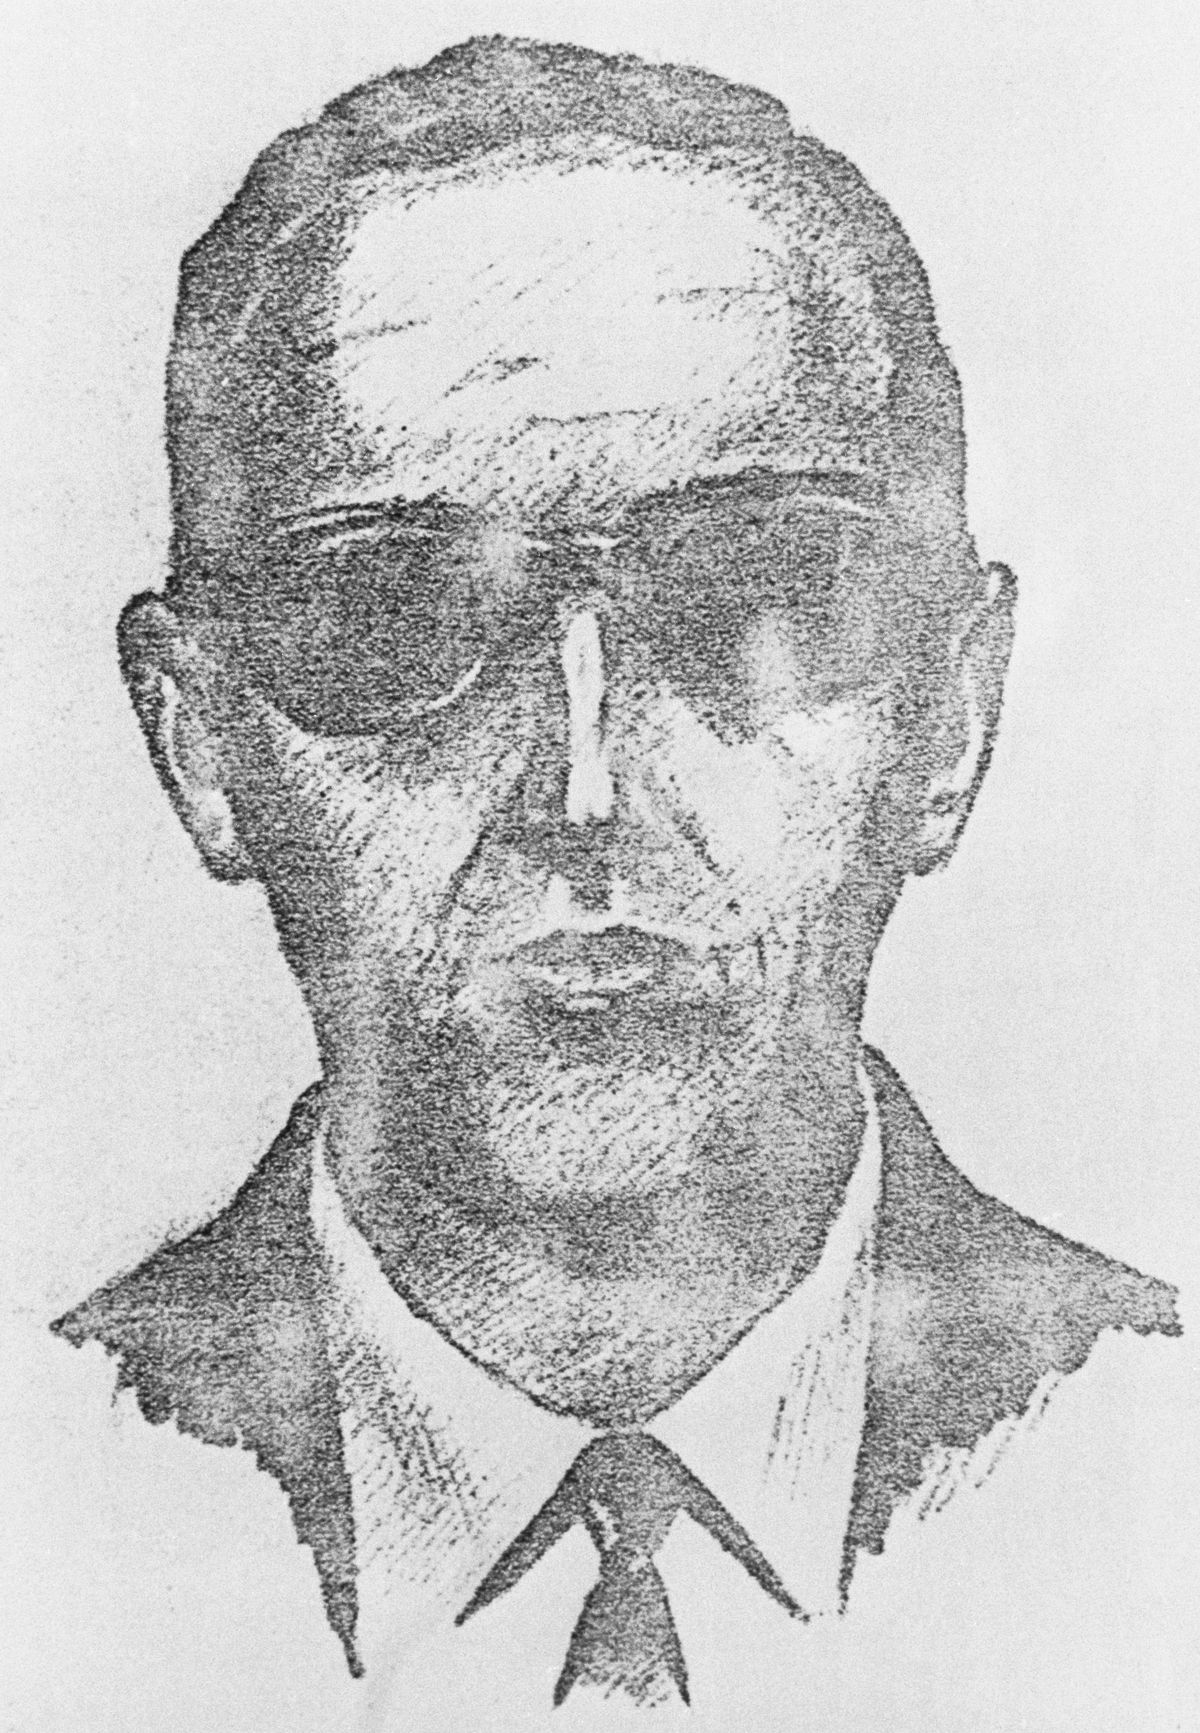 Sketch of Highjacking Suspect D. B. Cooper